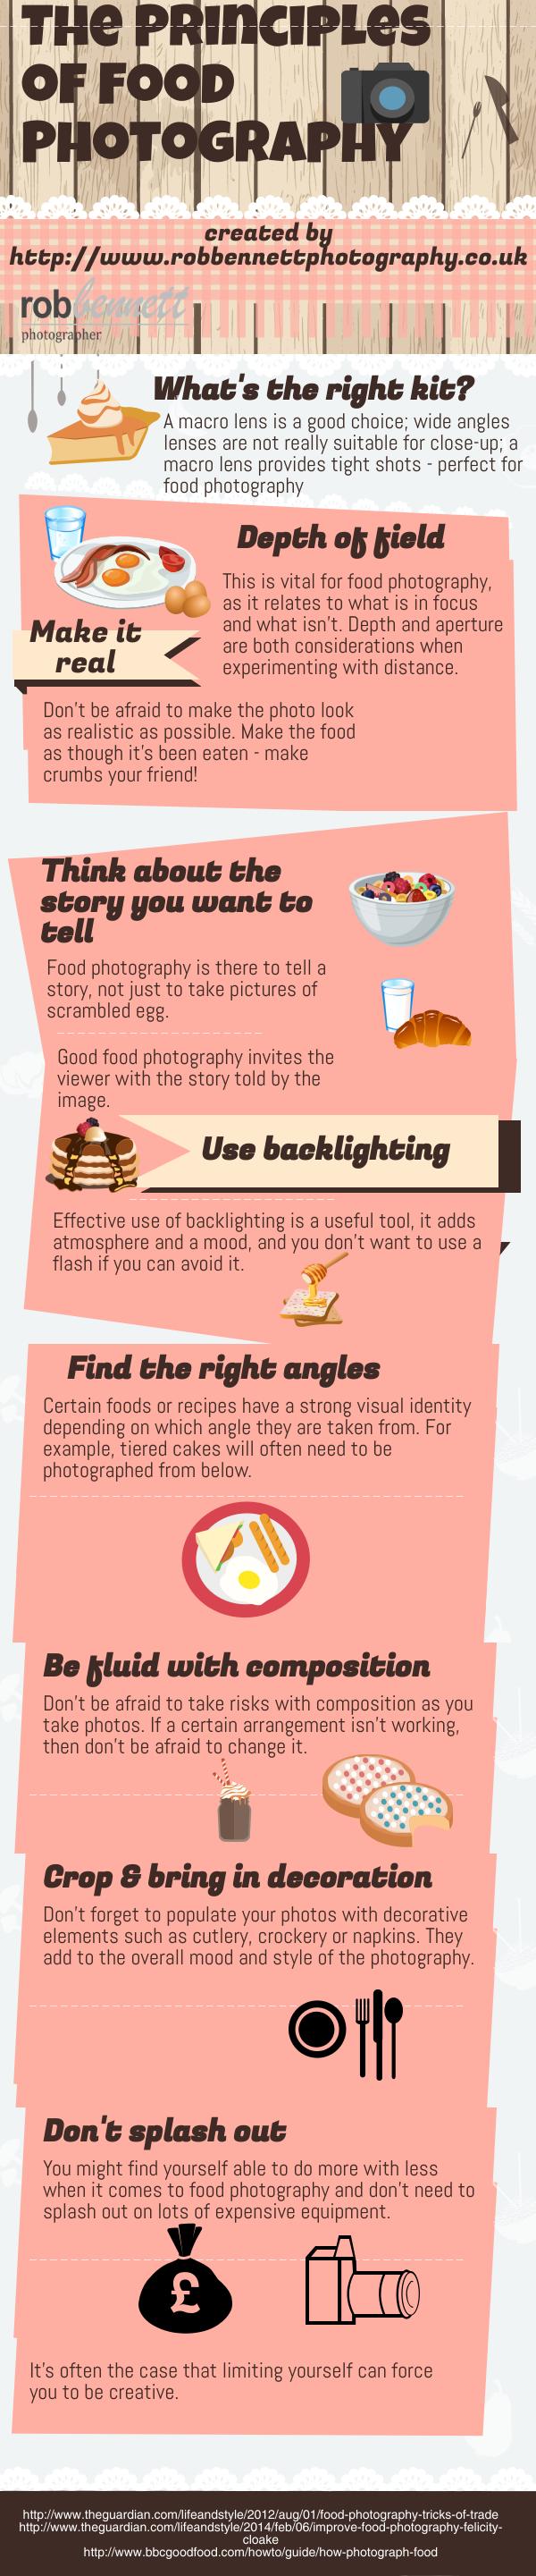 Principles of Food Photography